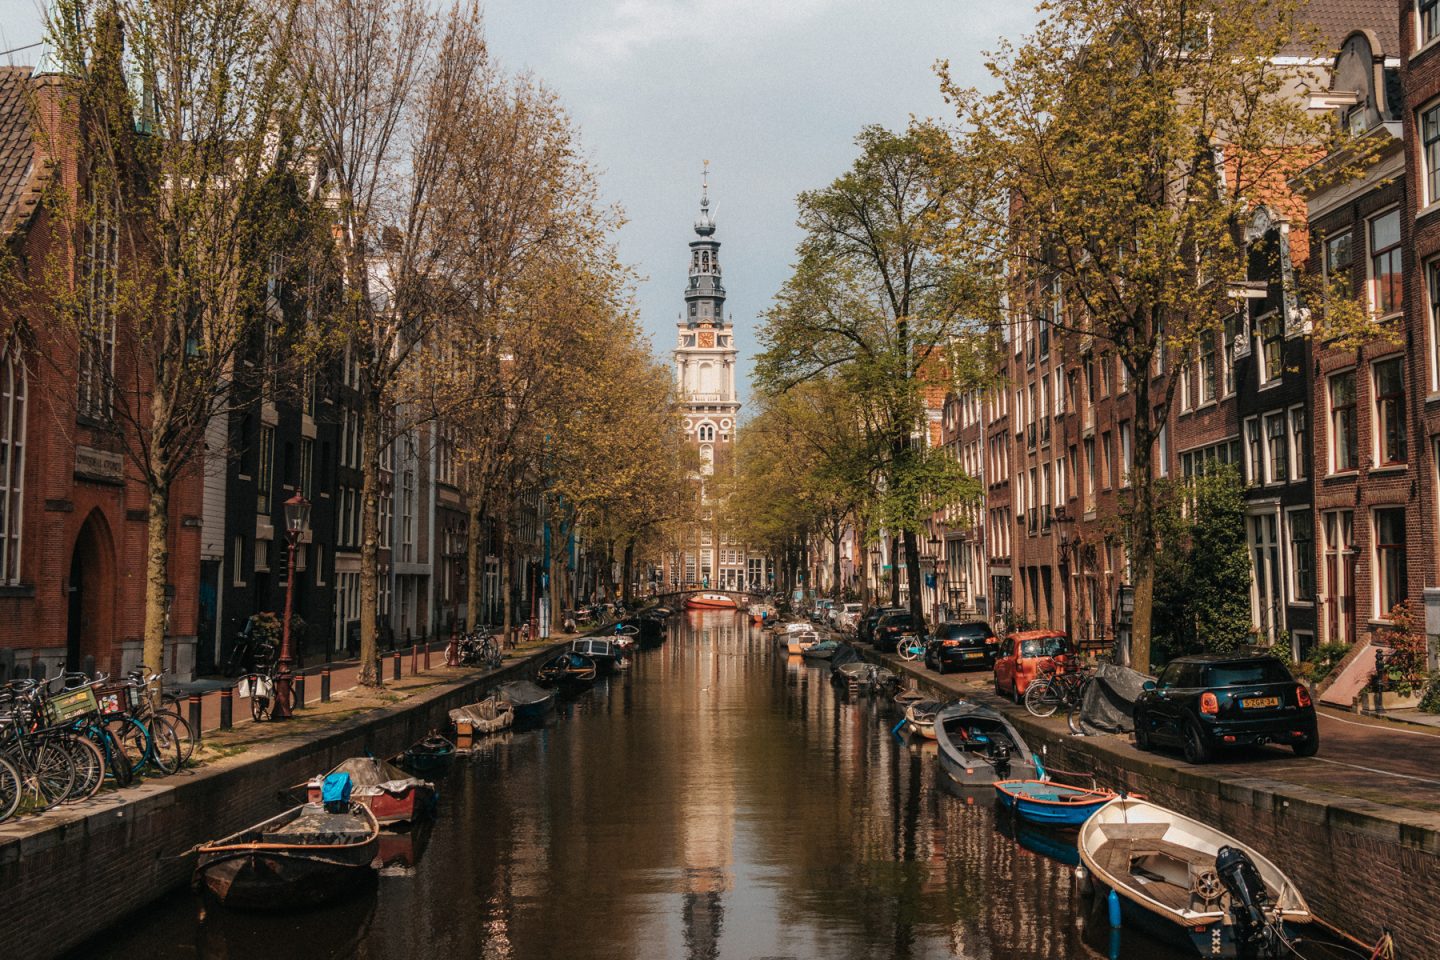 visit amsterdam on a budget